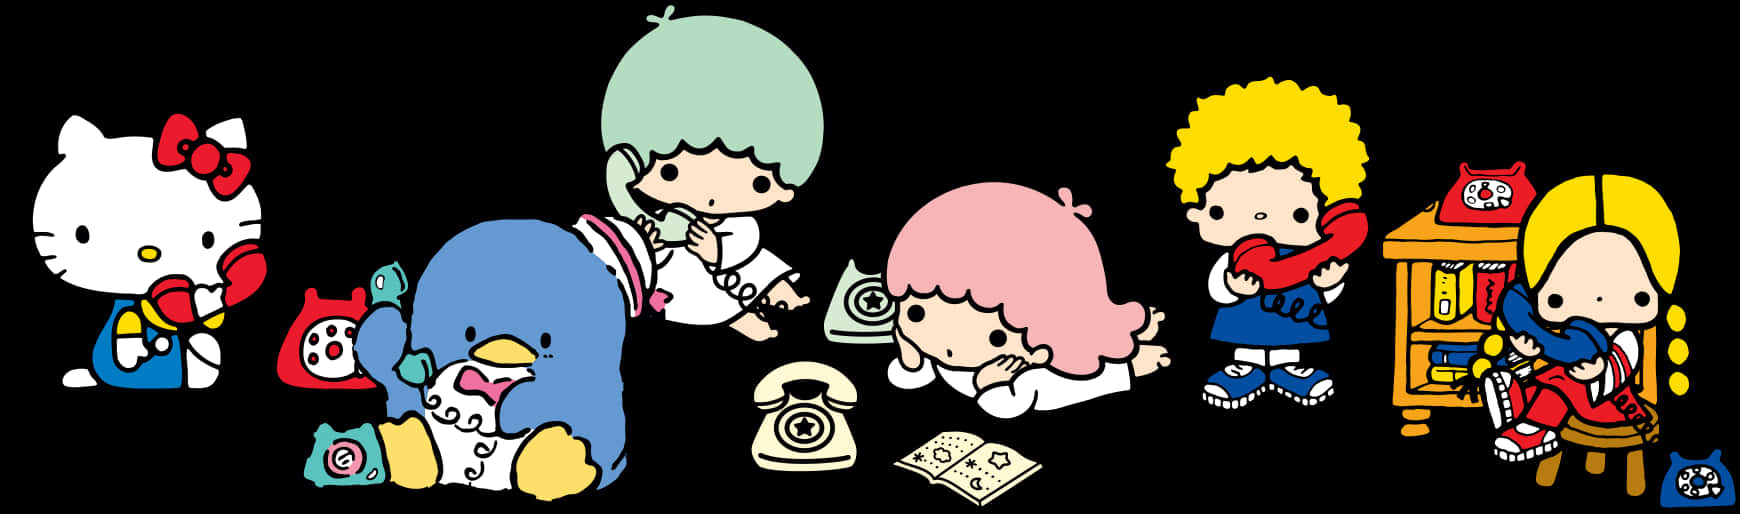 Sanrio Characters Phone Call